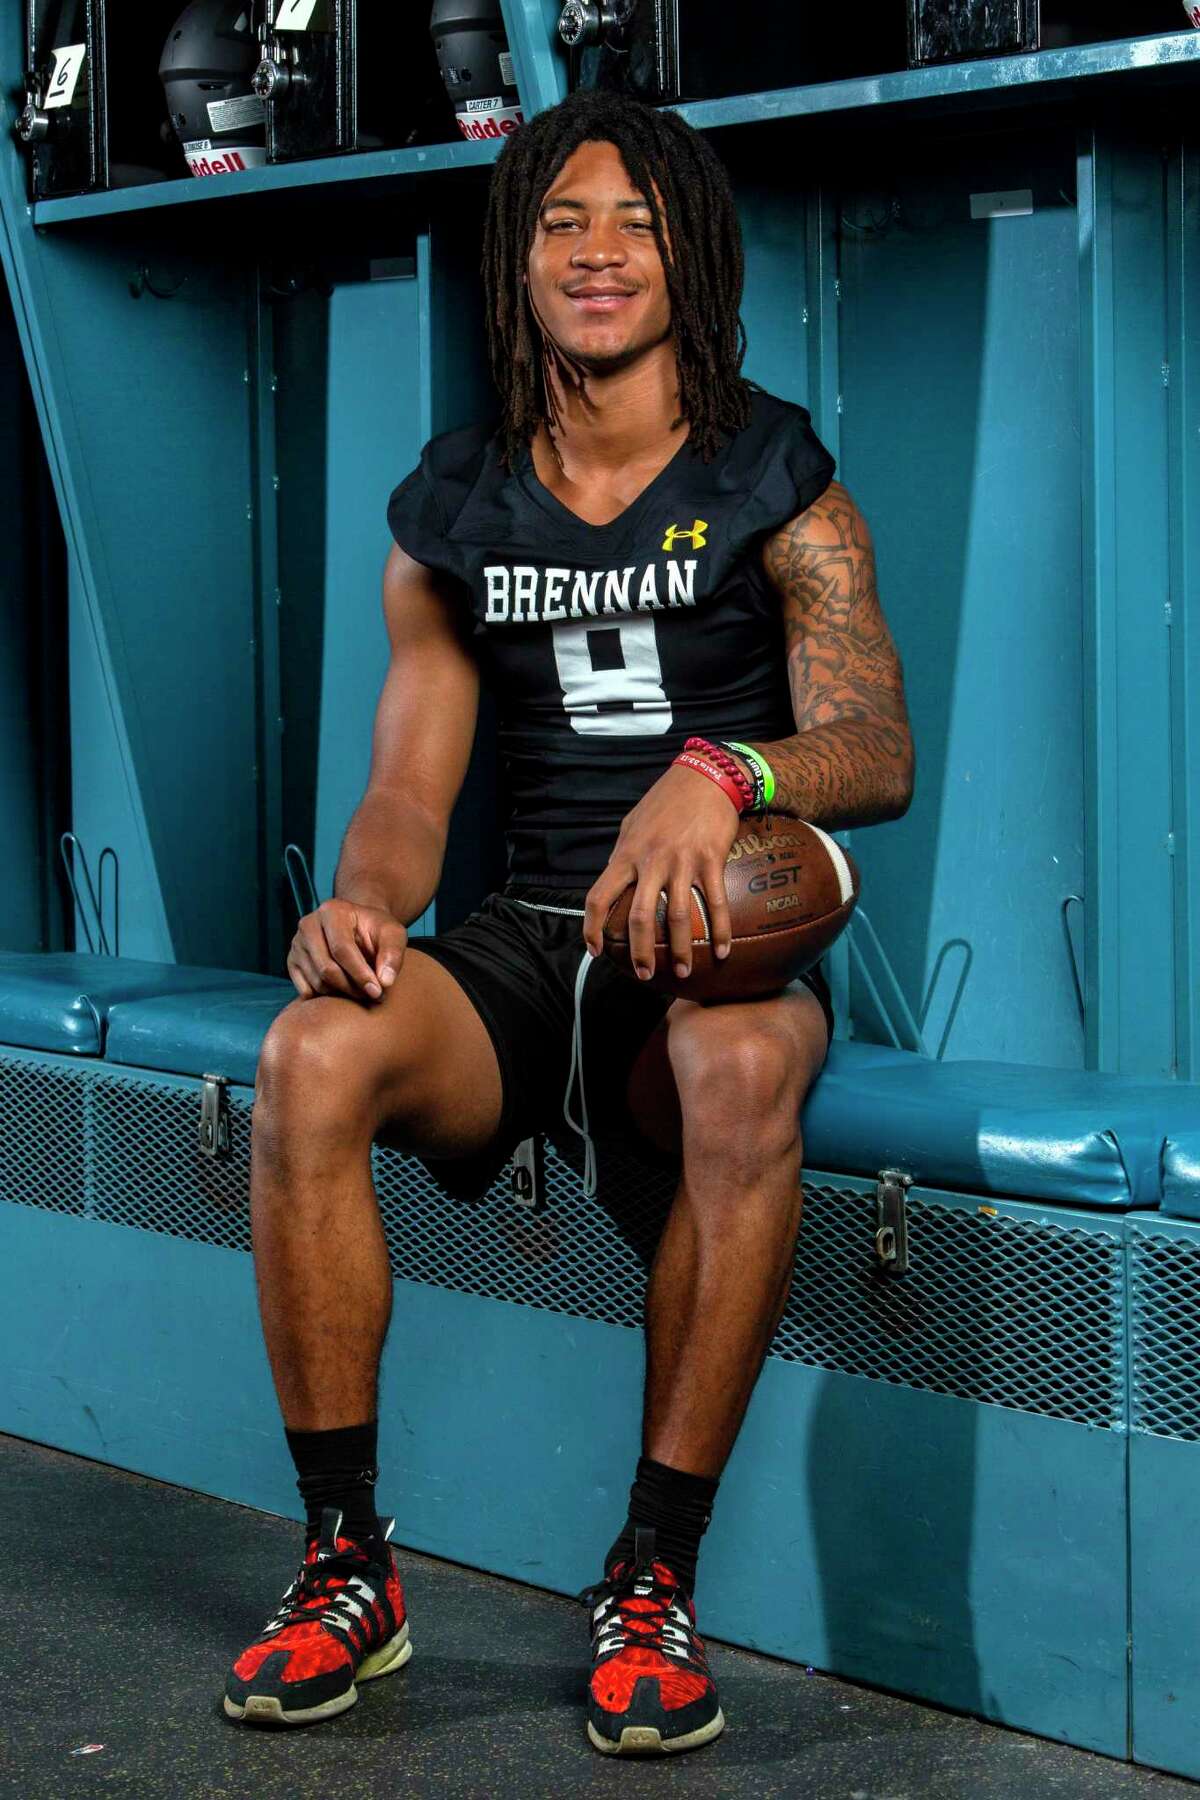 Ashton Dubose poses Aug. 2, 2022 in the Brennan High School locker room.